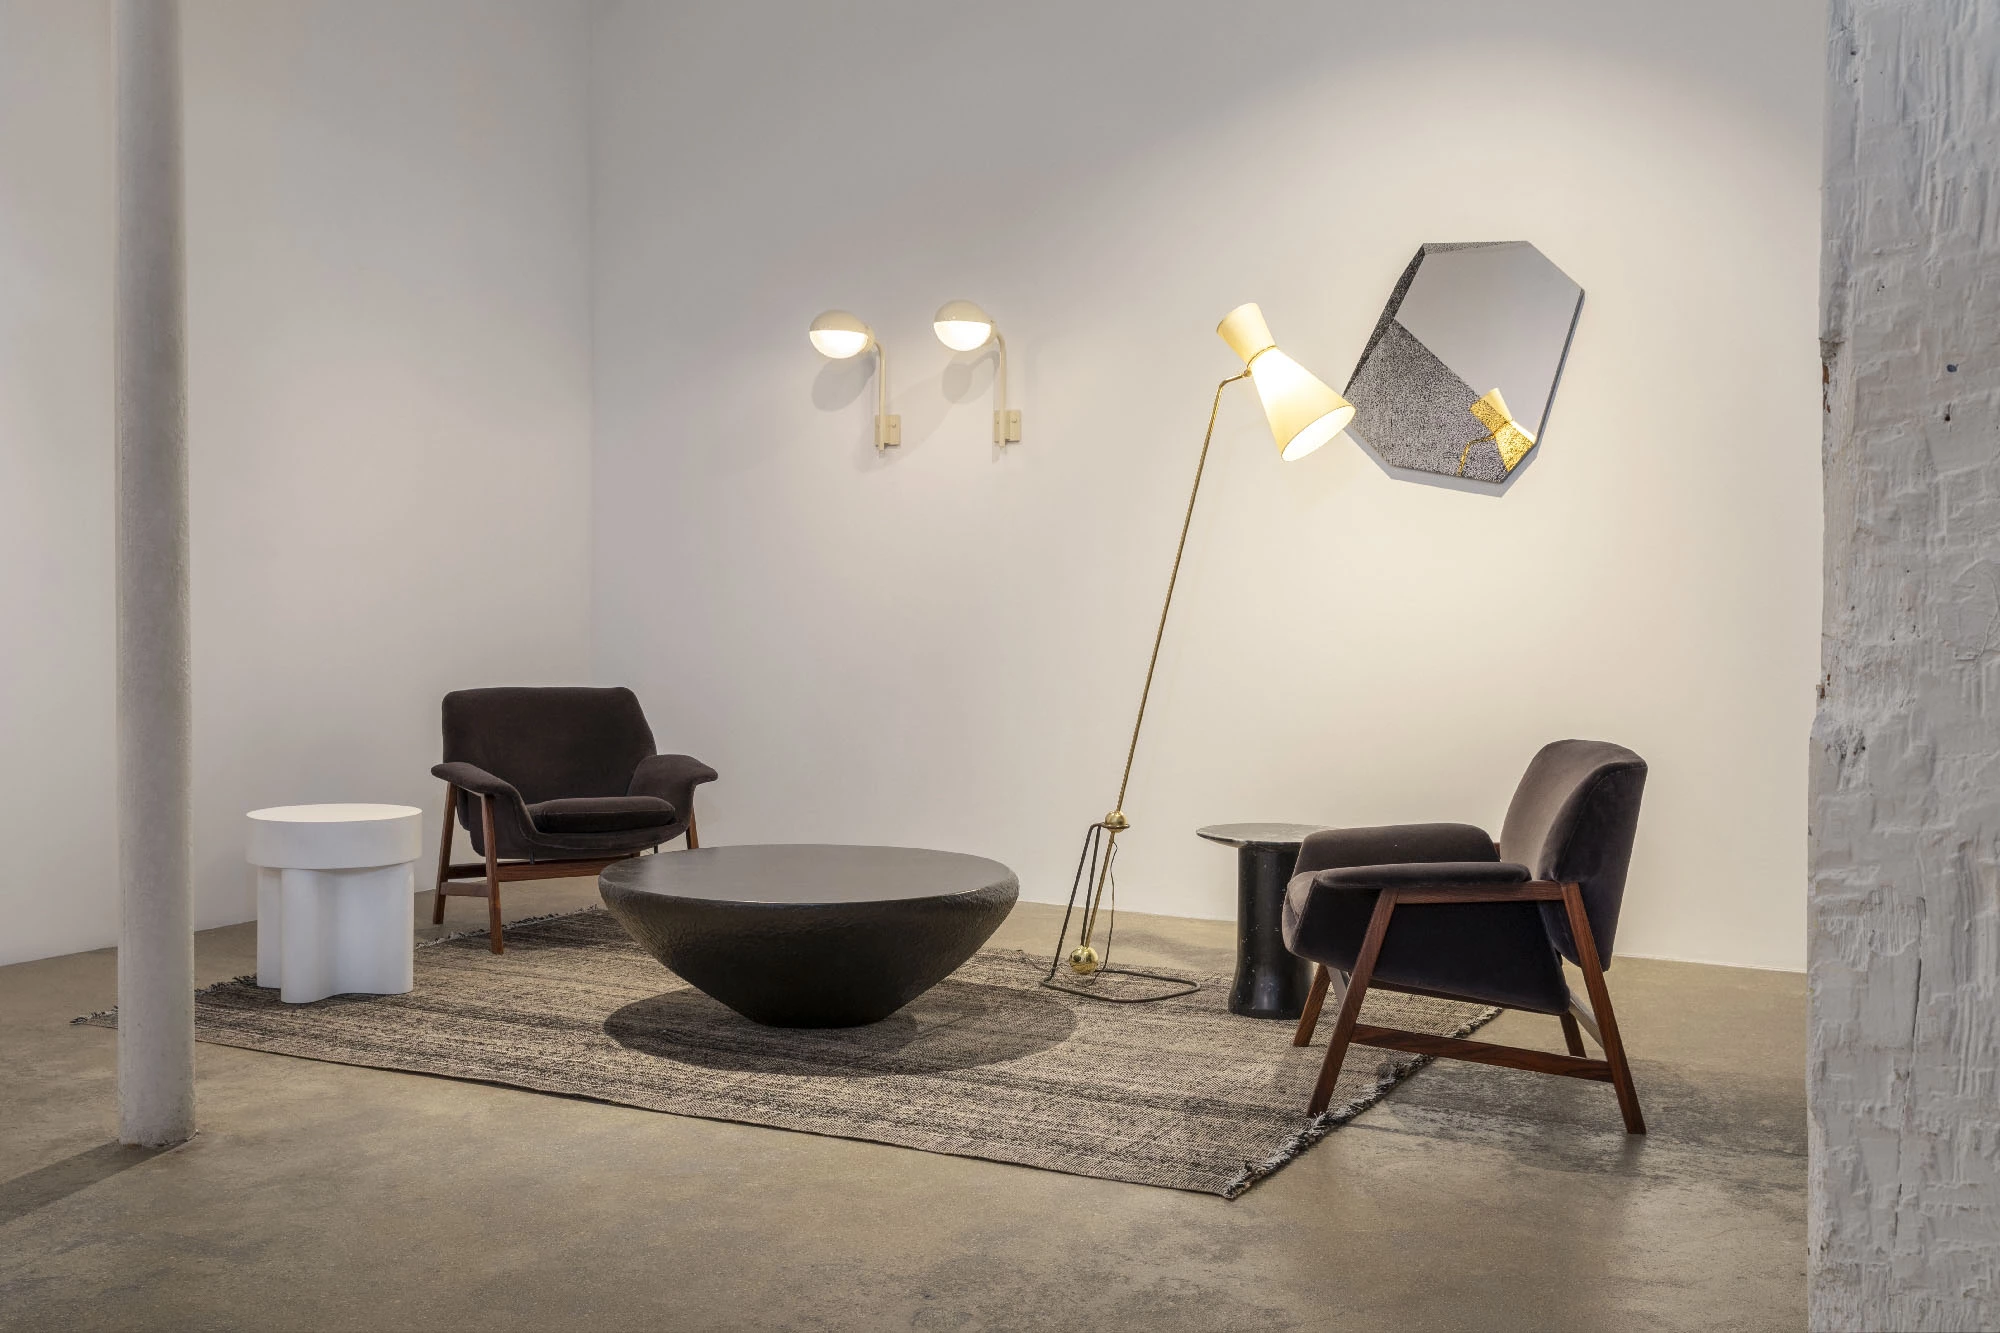 2 armchairs model n°849 and 1 ottoman n°849/S (plum) - Gianfranco Frattini - Seating - Galerie kreo